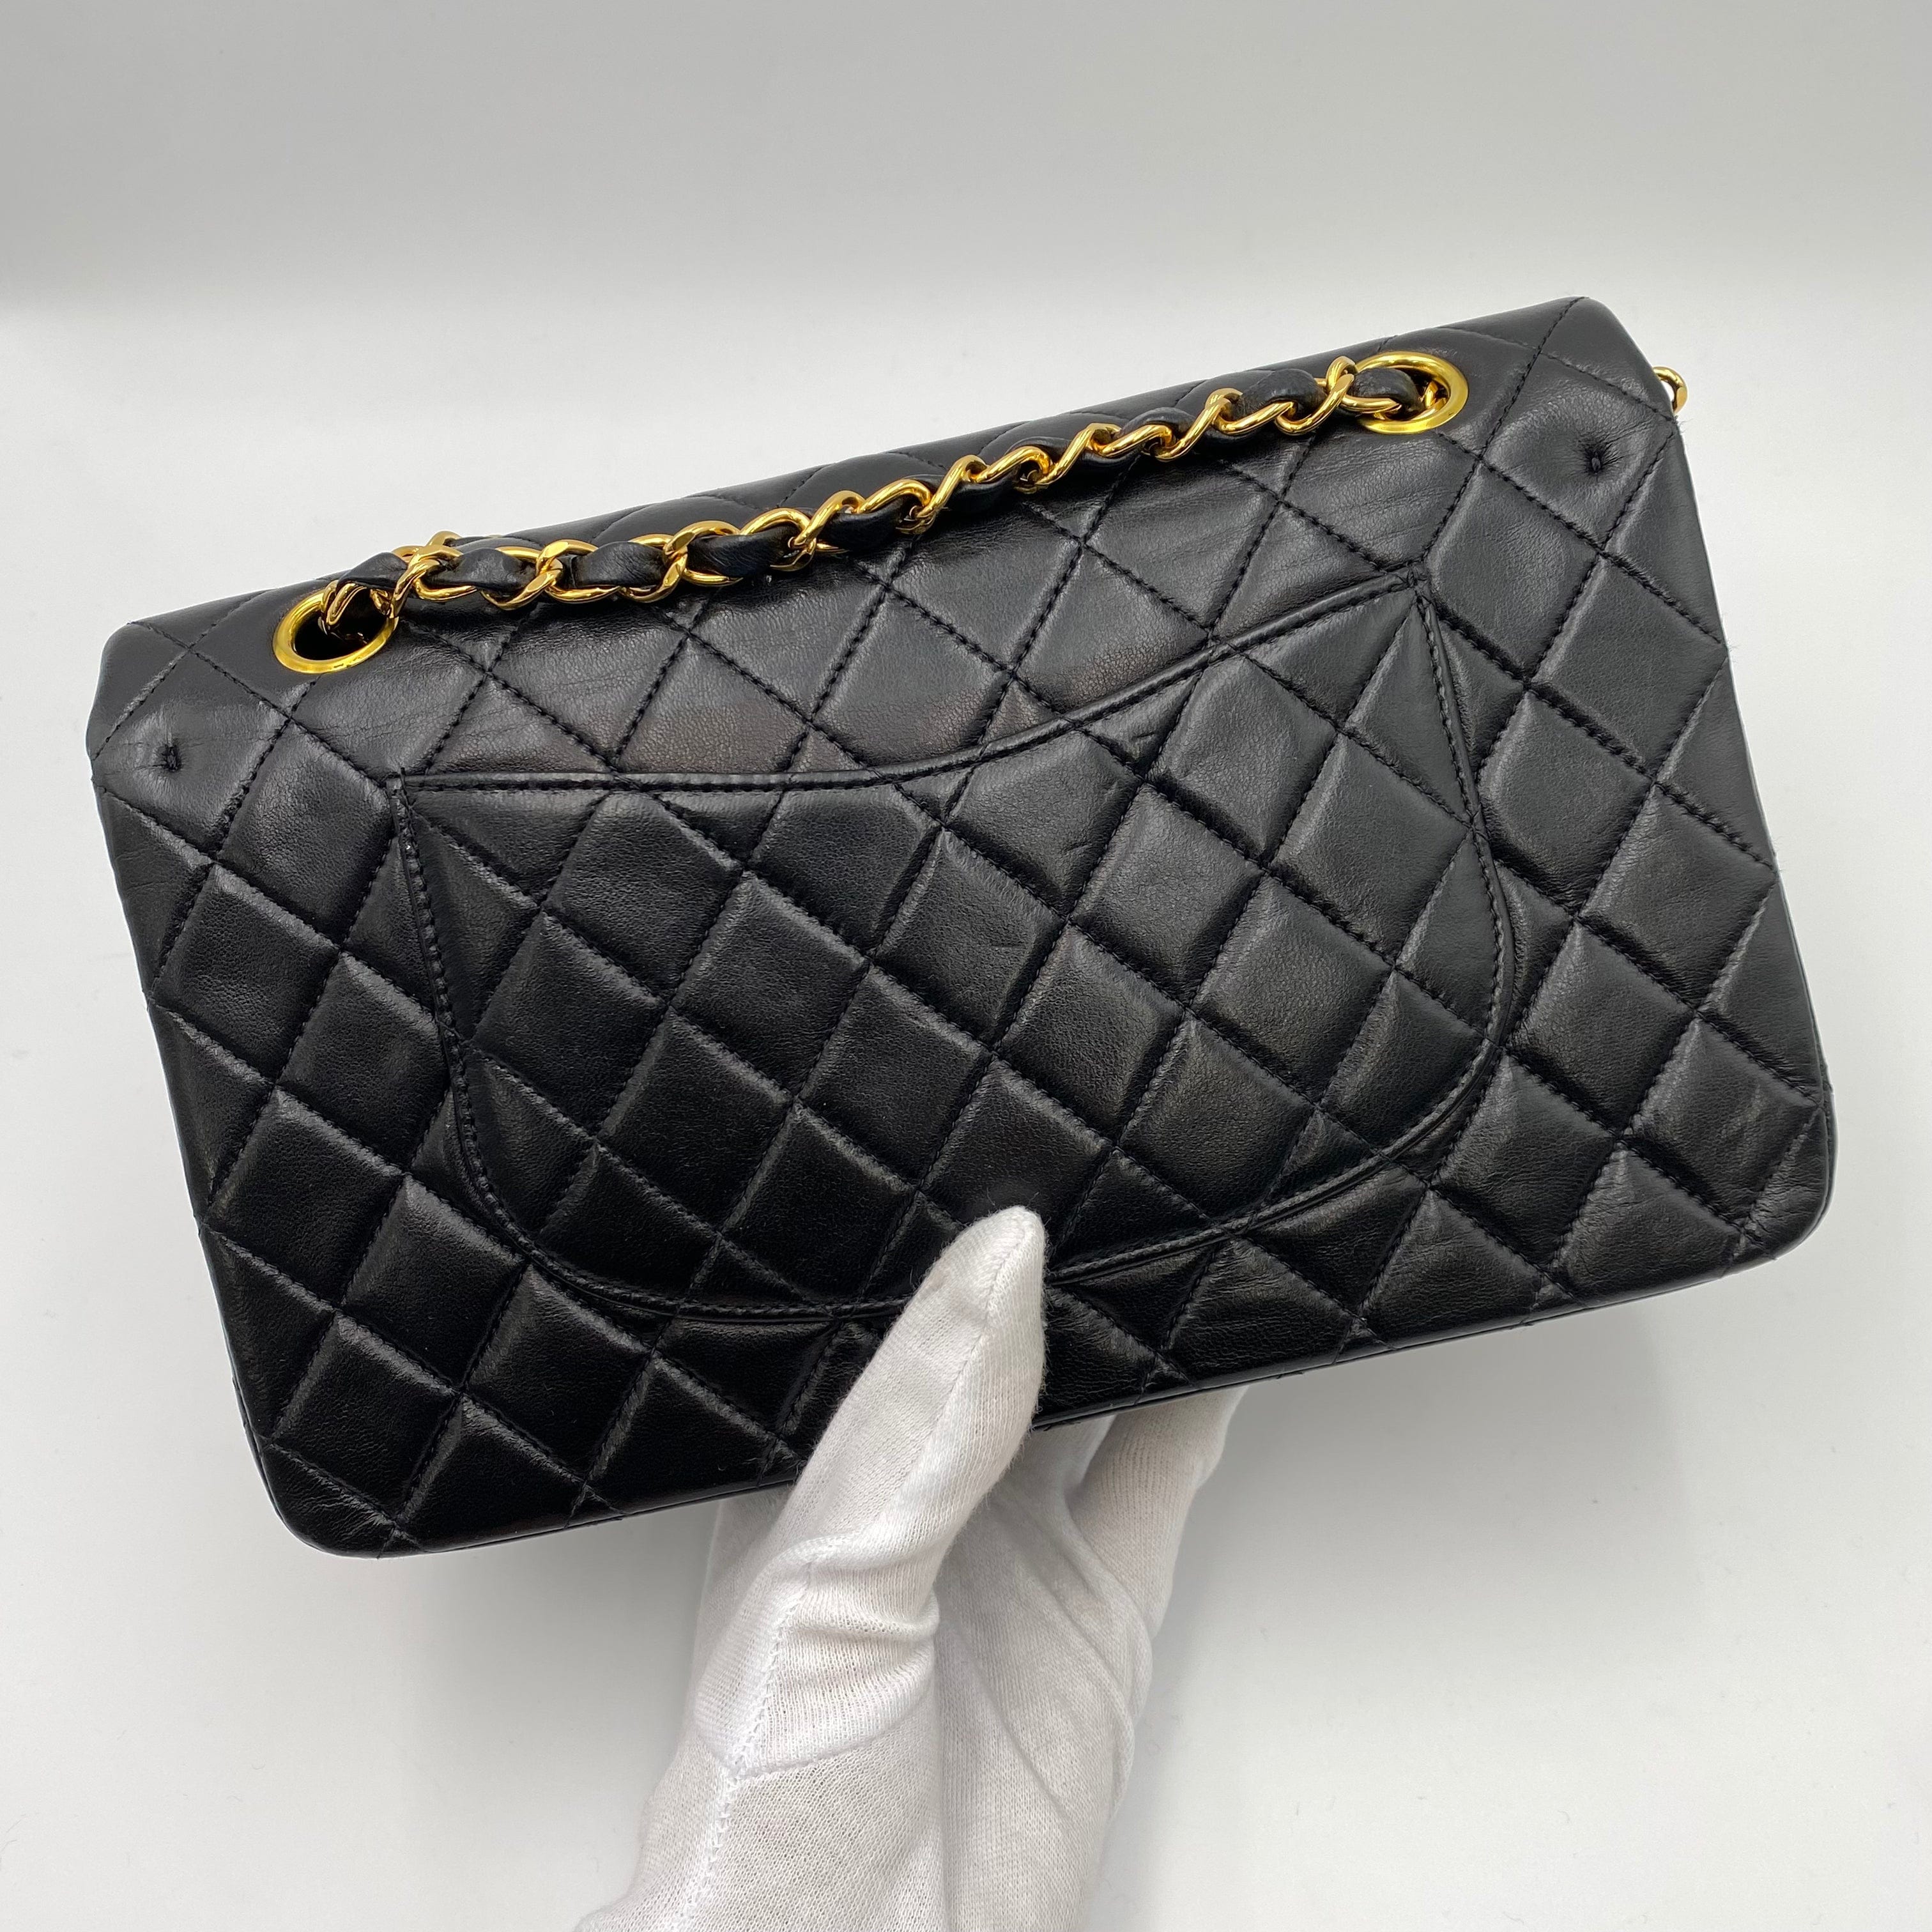 Luxury Promise CHANEL VINTAGE CLASSIC FLAP MEDIUM CHAIN SHOULDER BAG BLACK LAMB SKIN 90219630